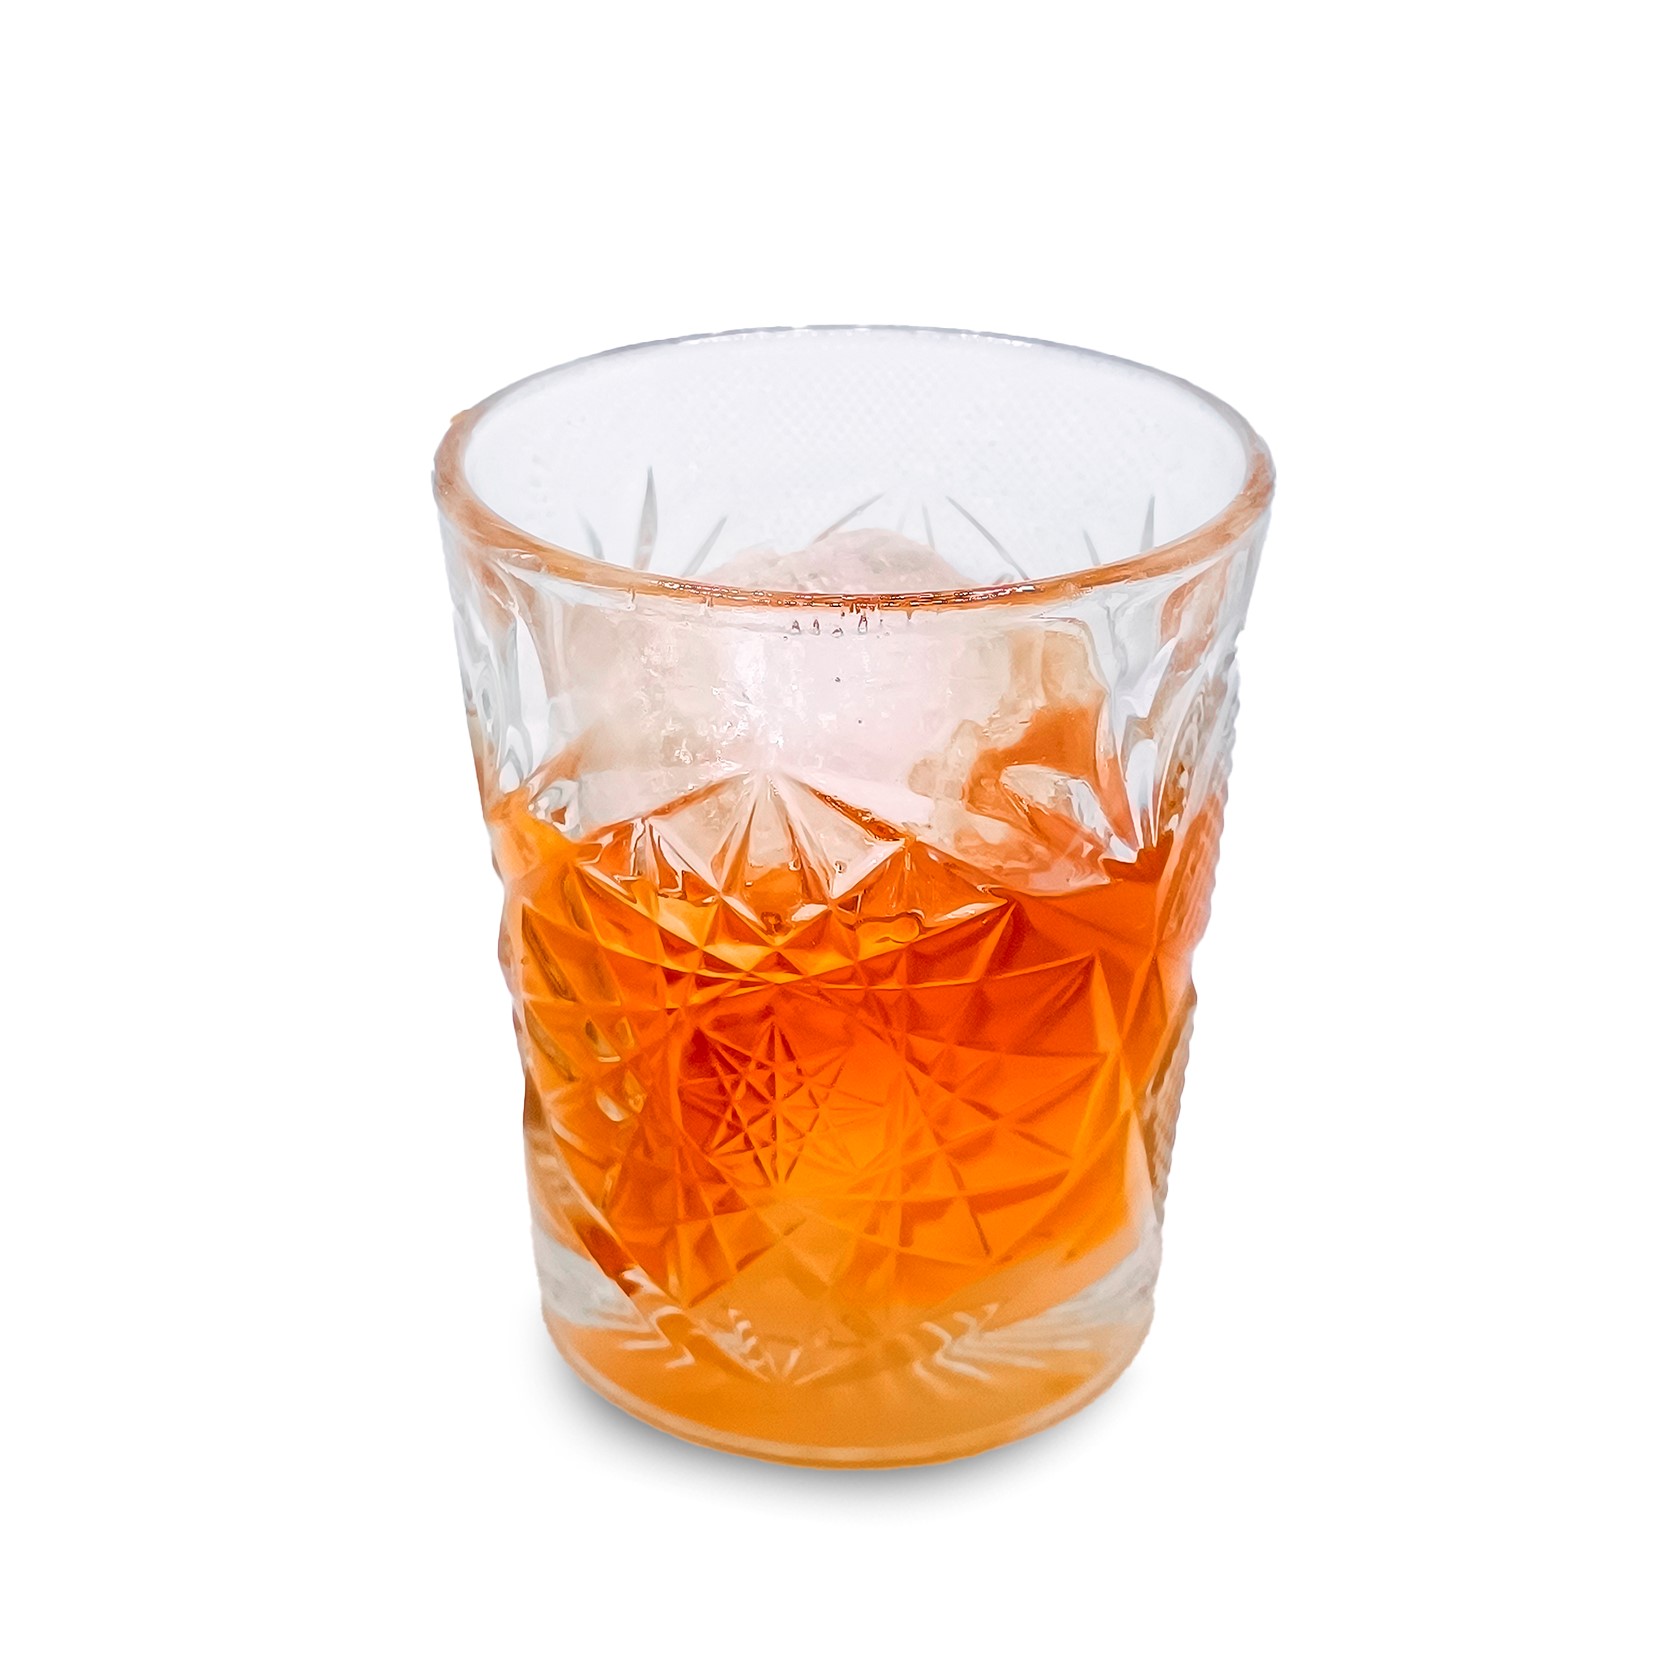 Old Fashioned (Bourbon, Angostura, orange peel, sugar)